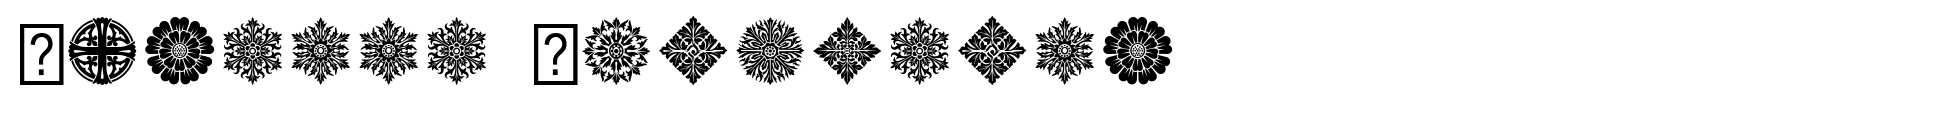 Rosette Ornaments